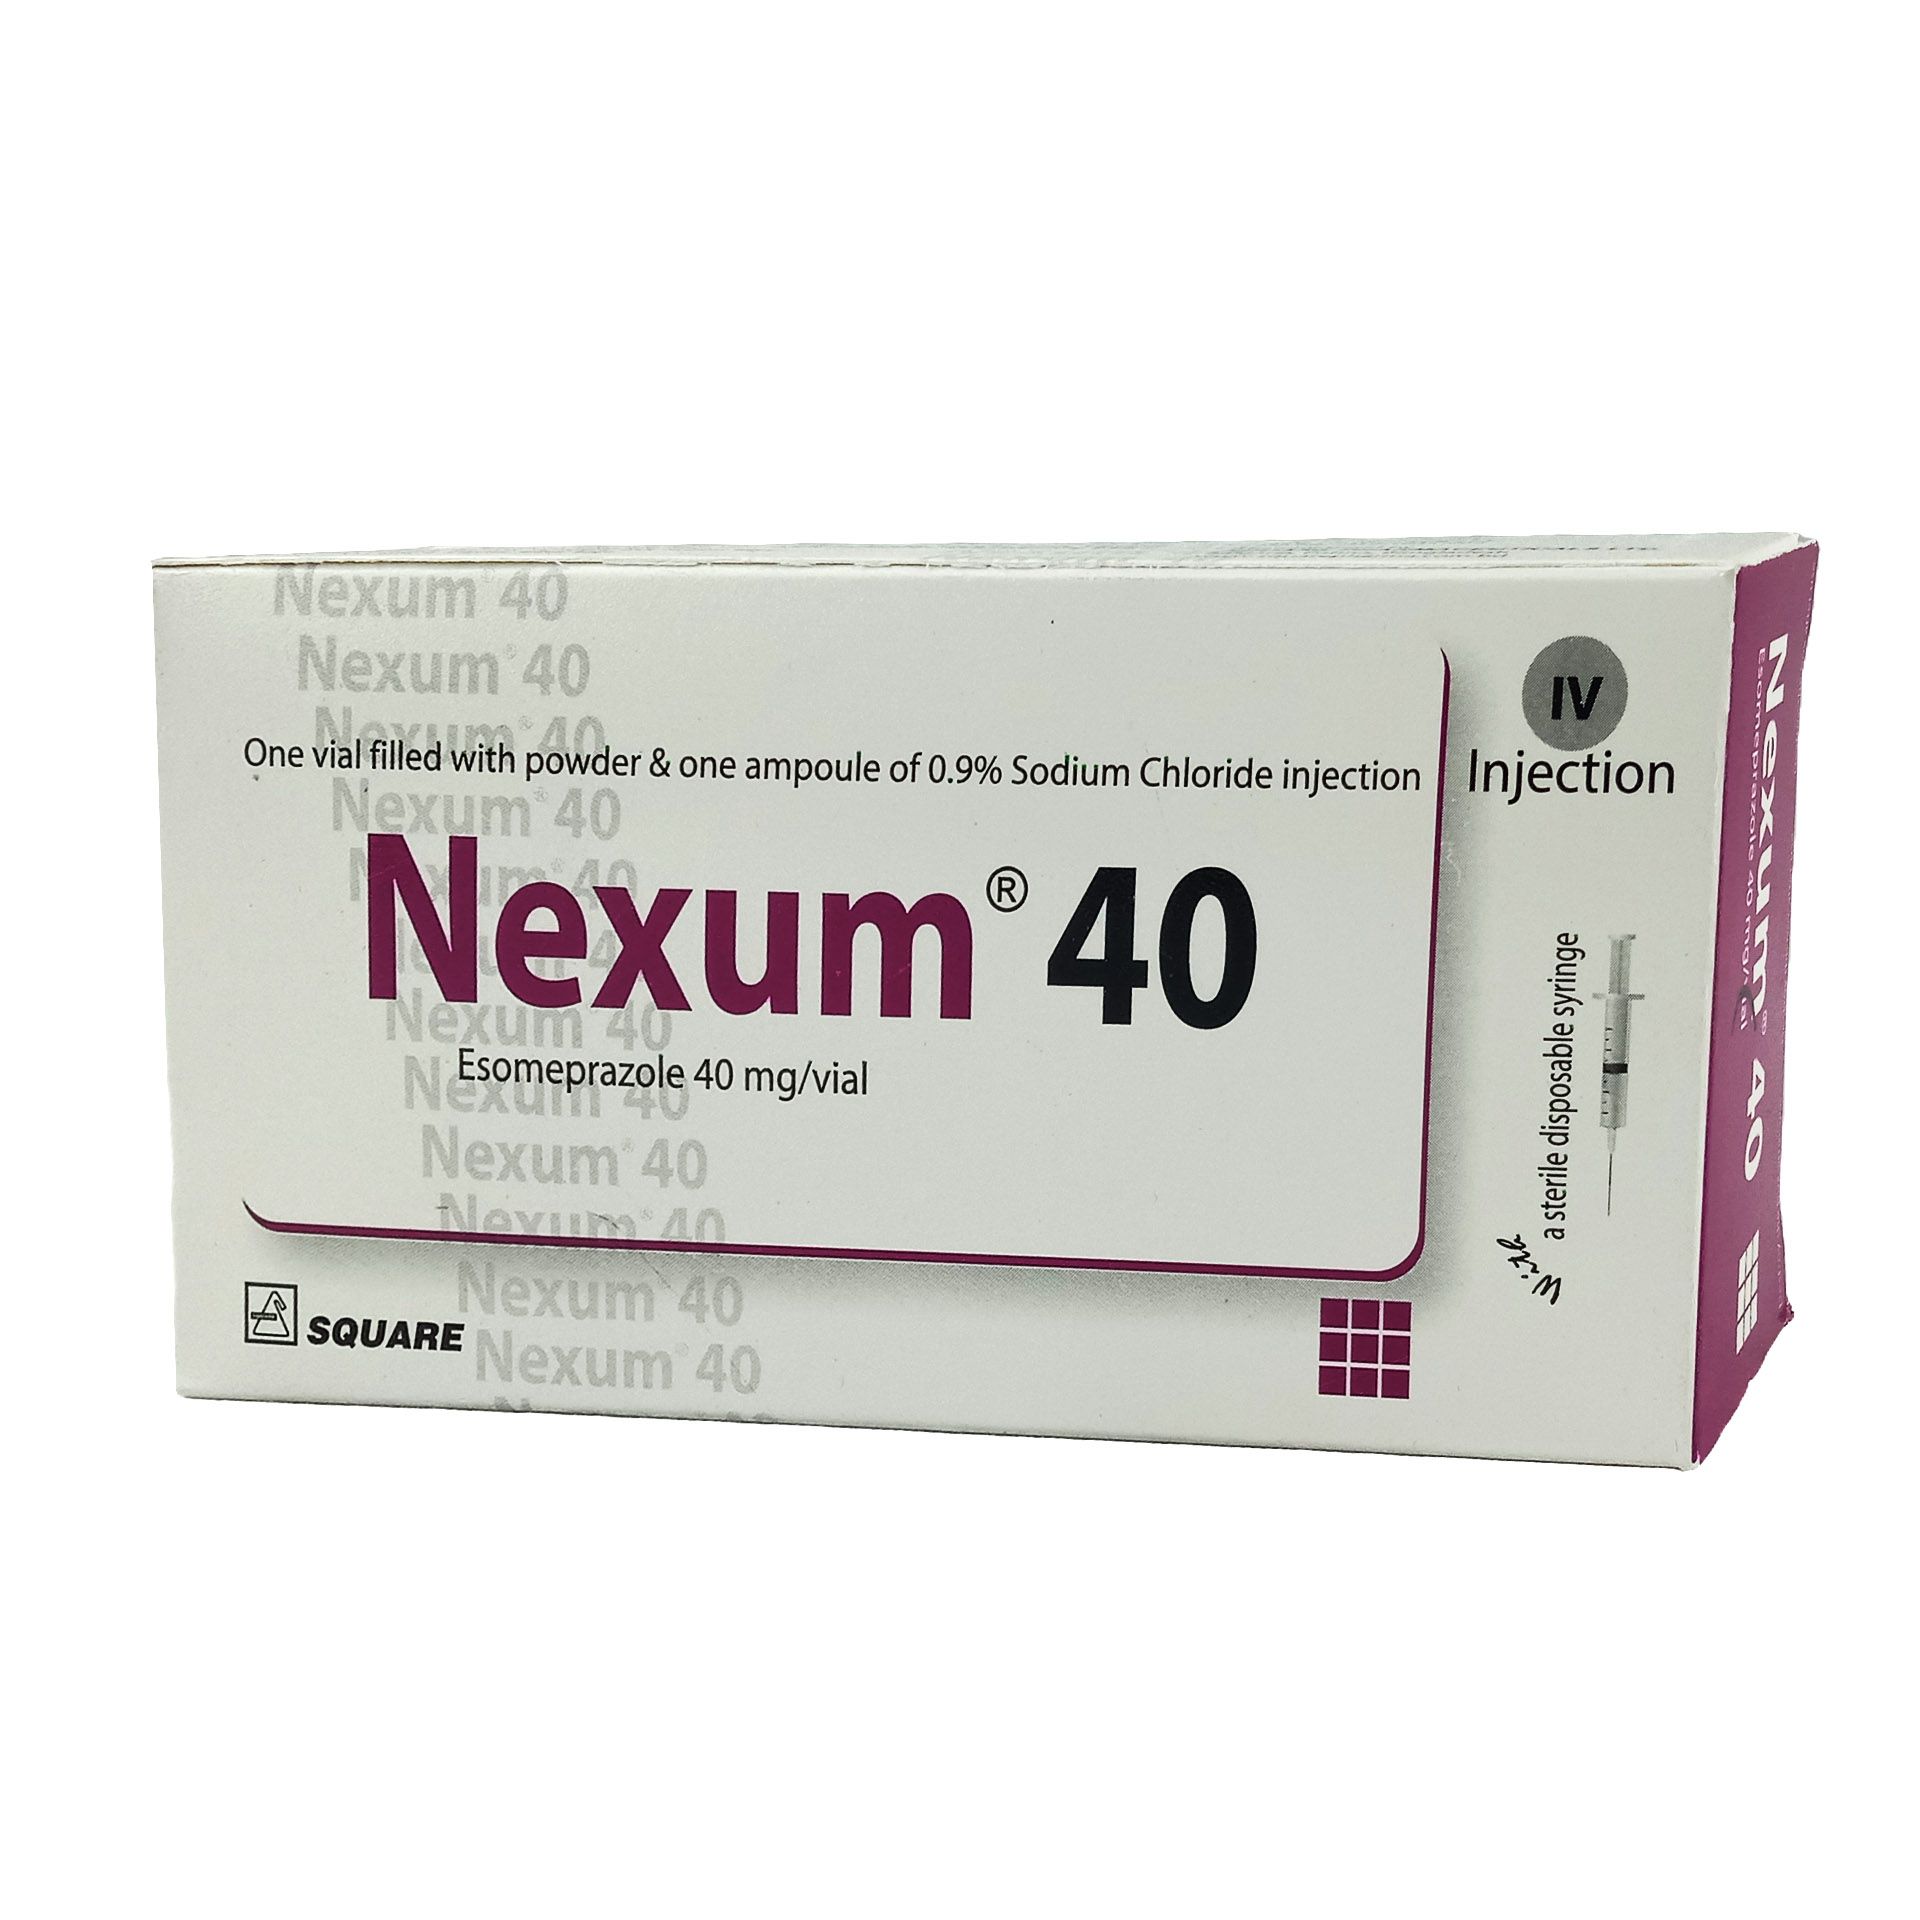 Nexum IV 40mg/vial Injection